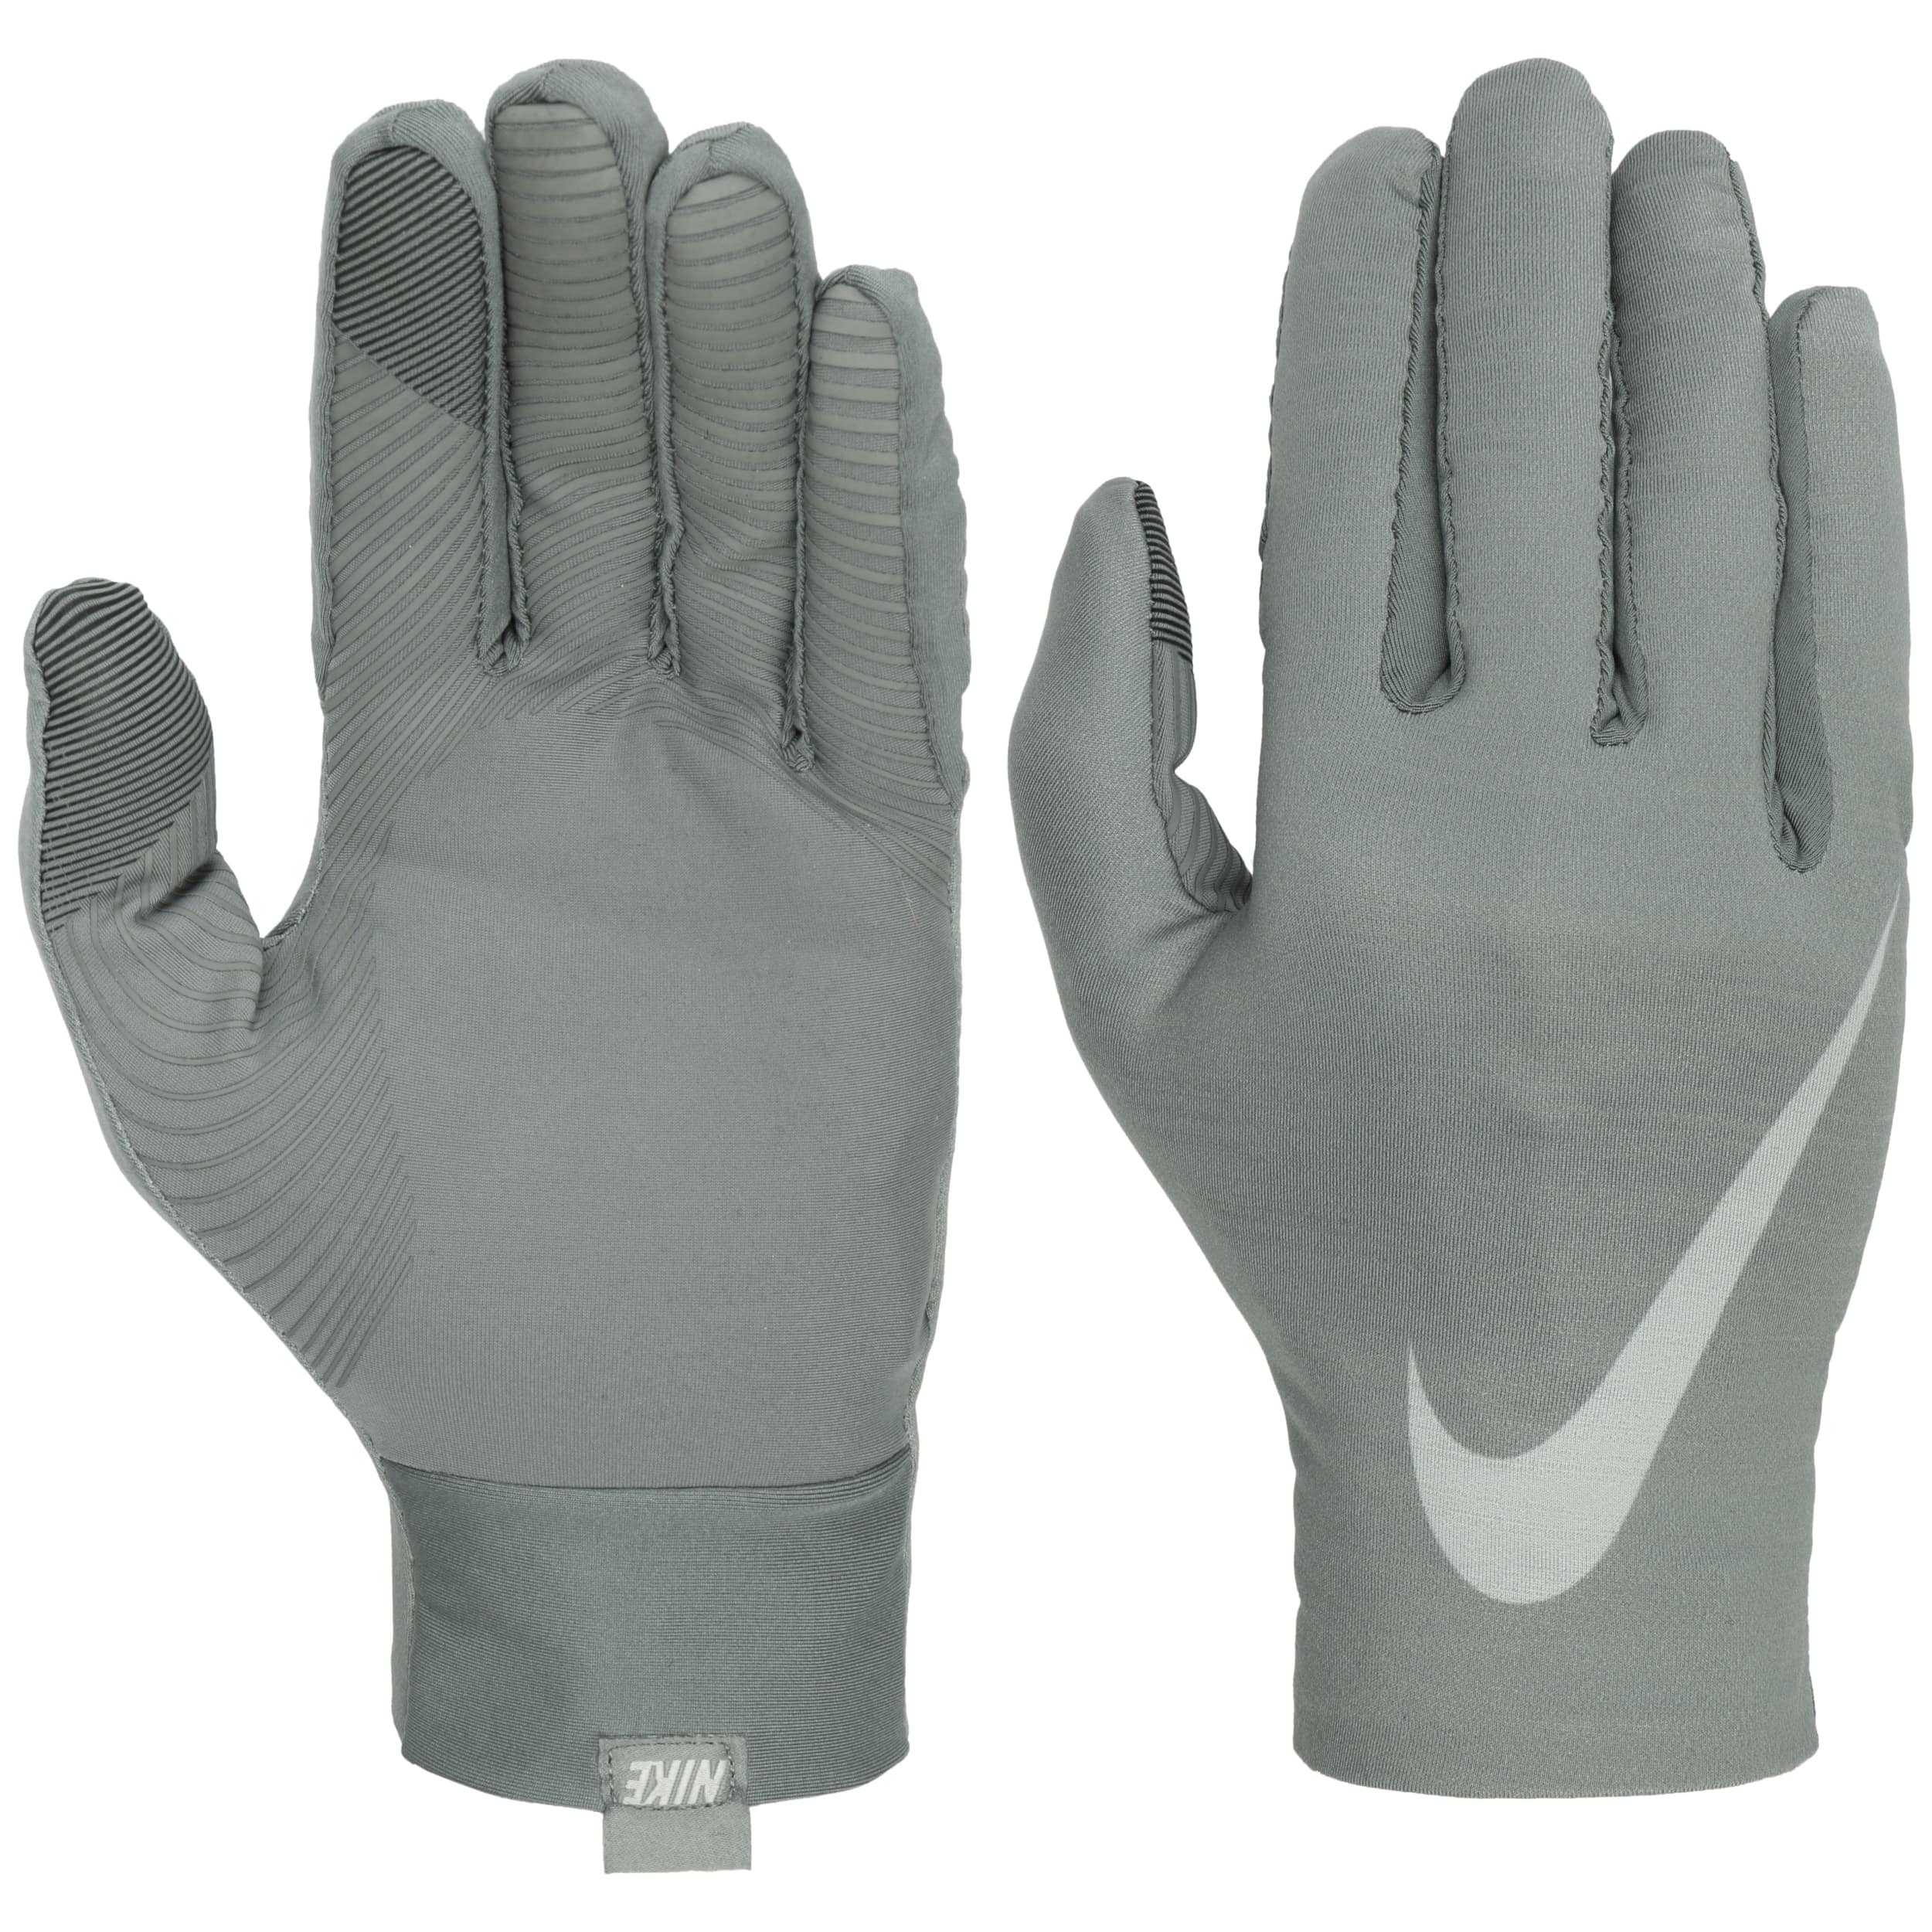 nike gloves grey